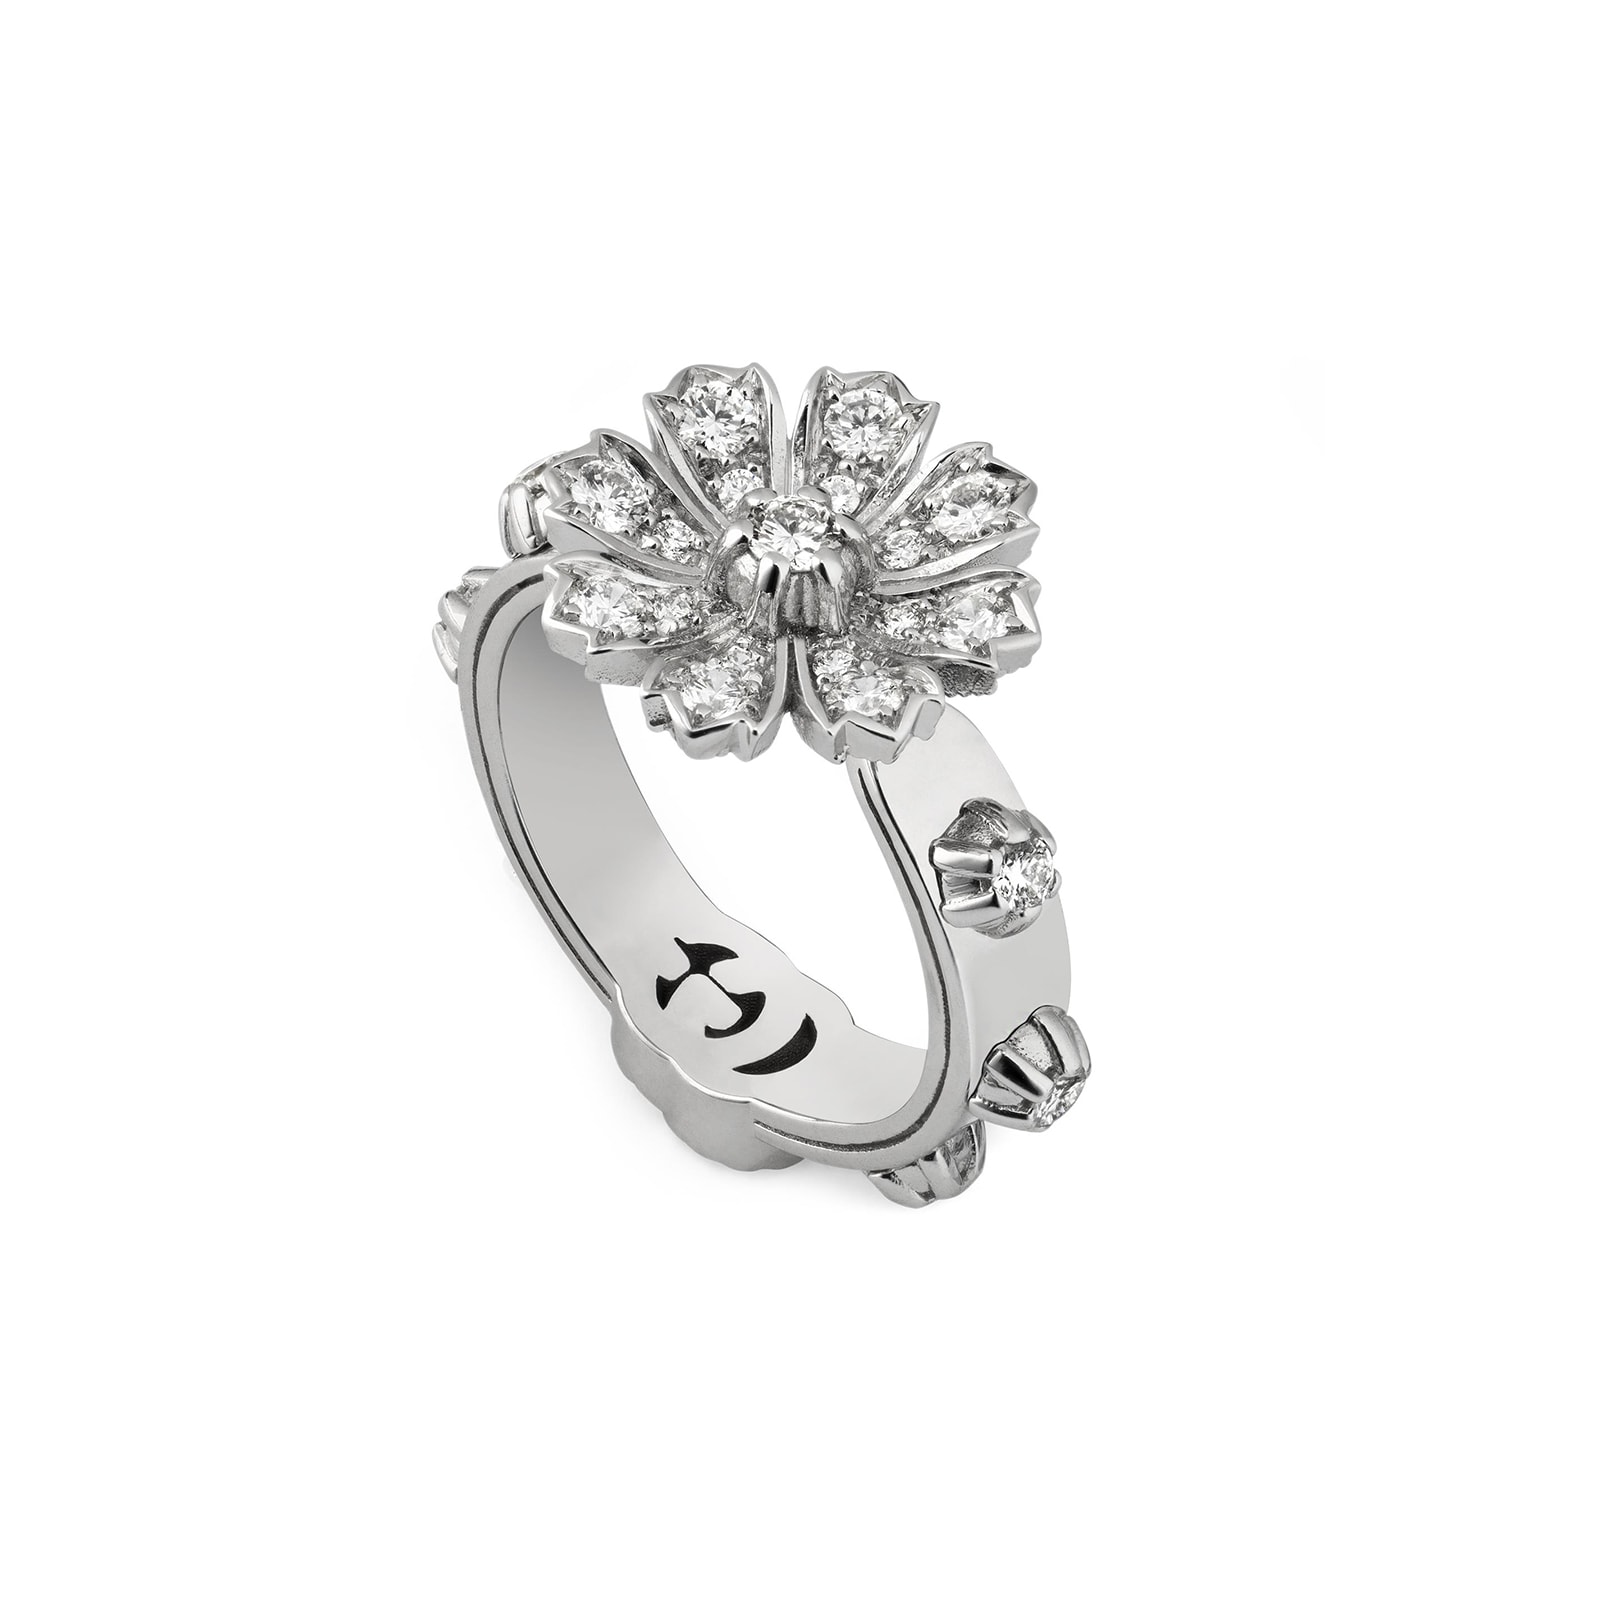 18ct White Gold Diamond Ring - Size 6